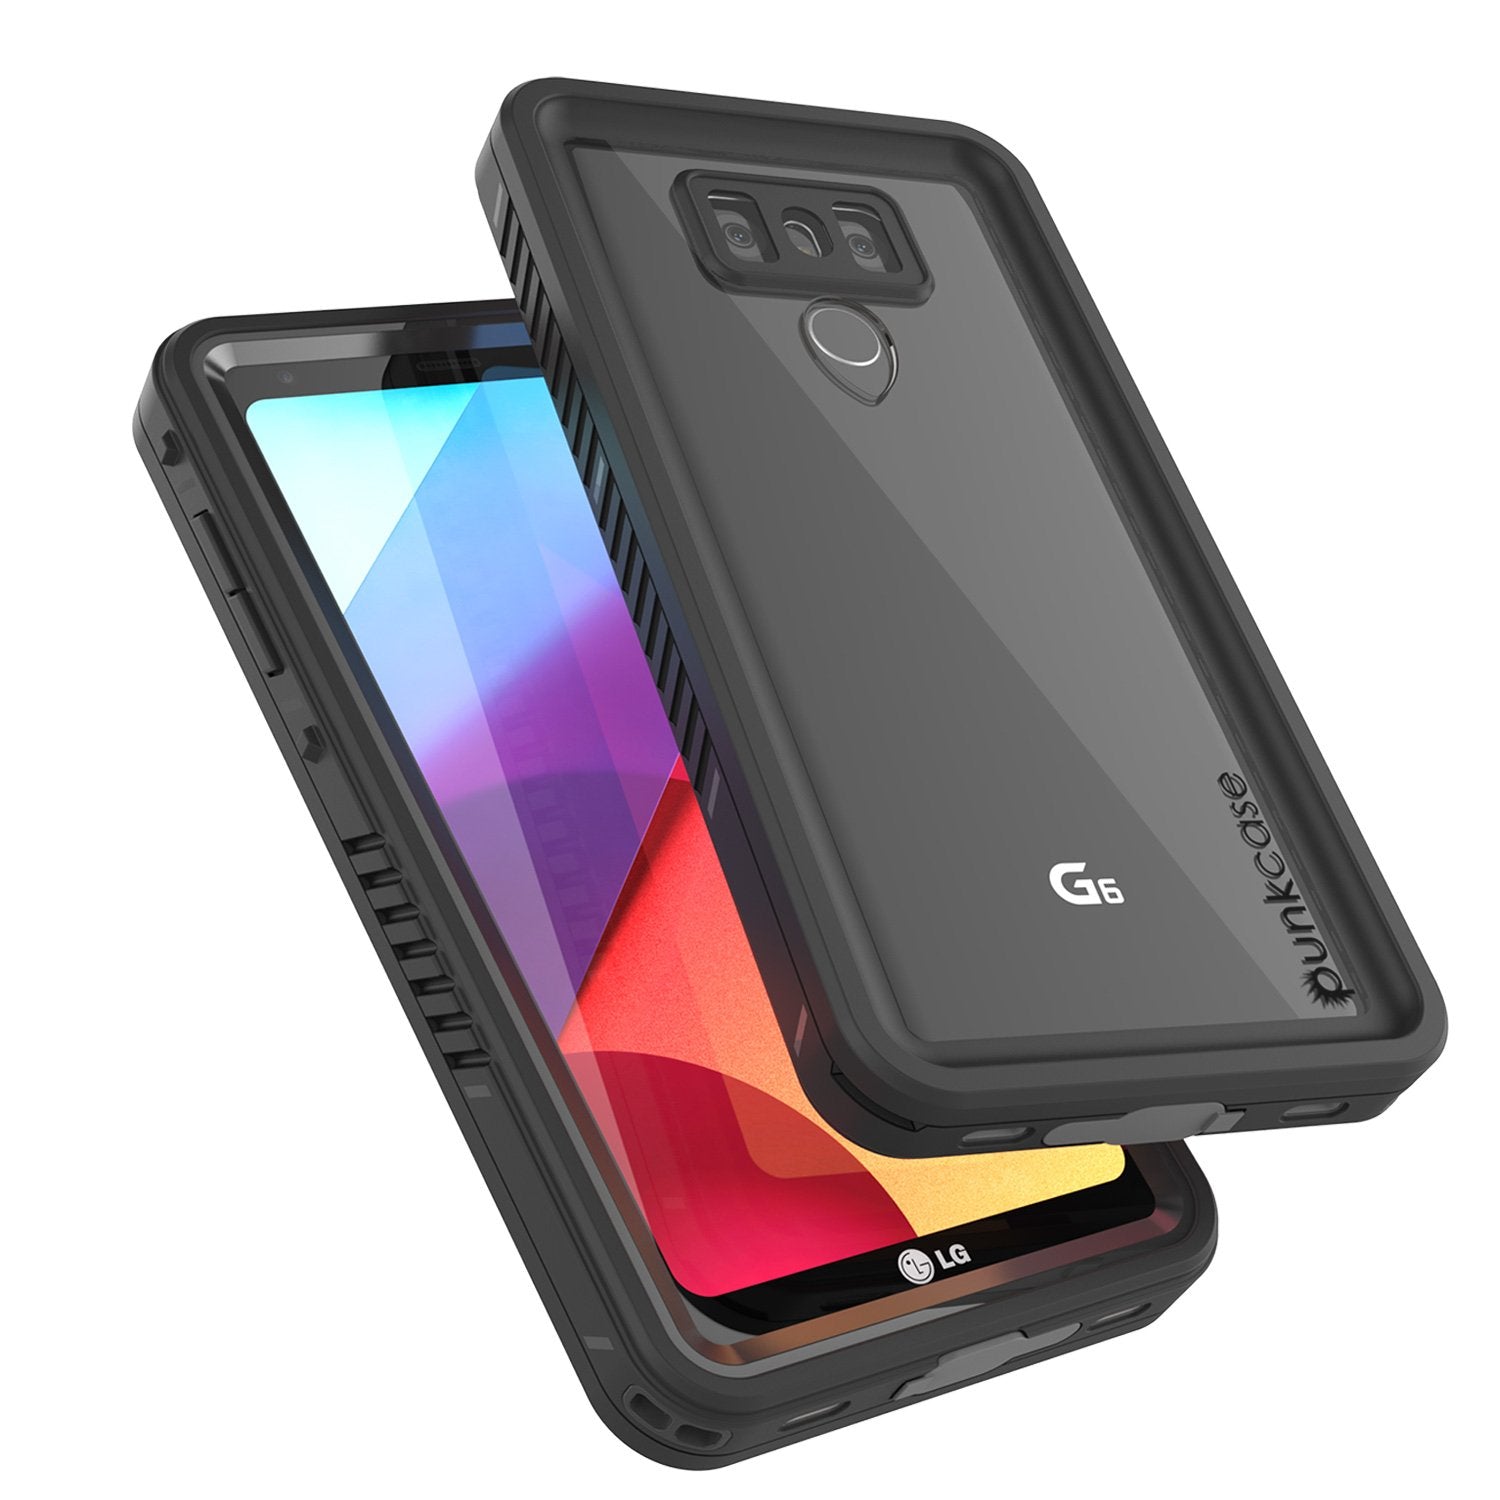 LG G6 Waterproof Case, Punkcase [Extreme Series] Slim Fit, BLACK